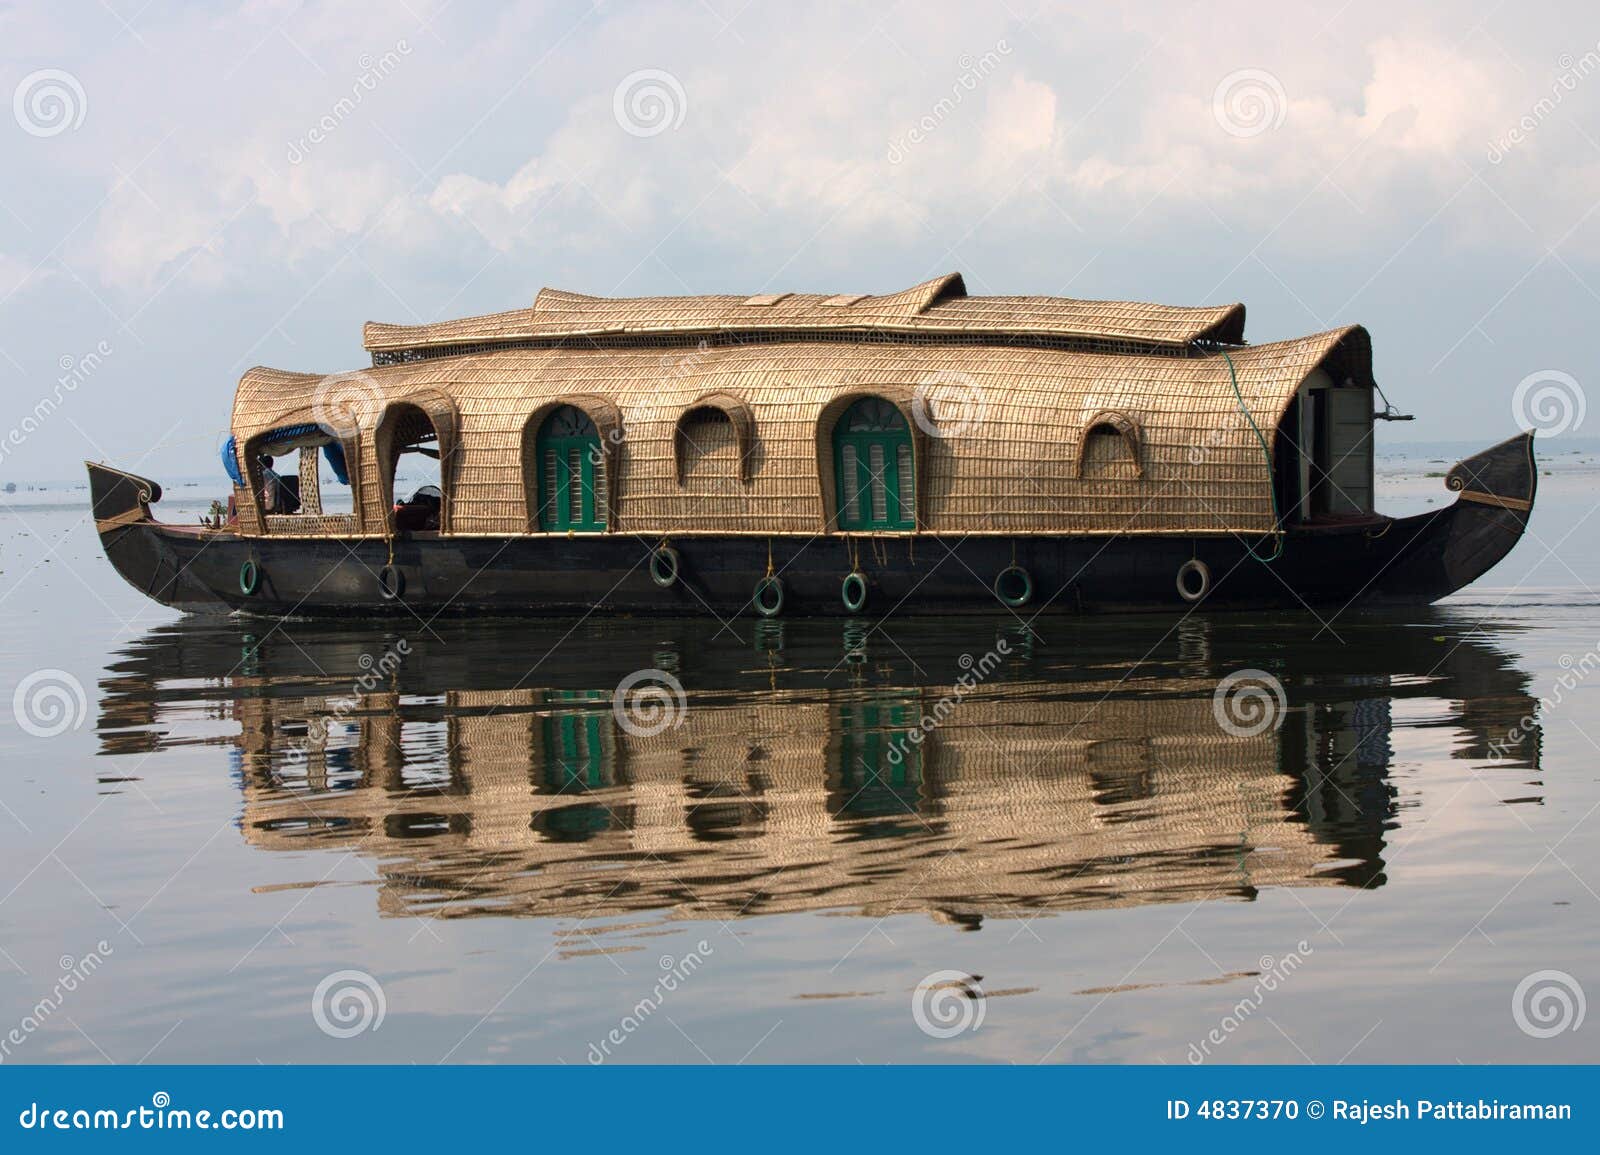 houseboat reflection